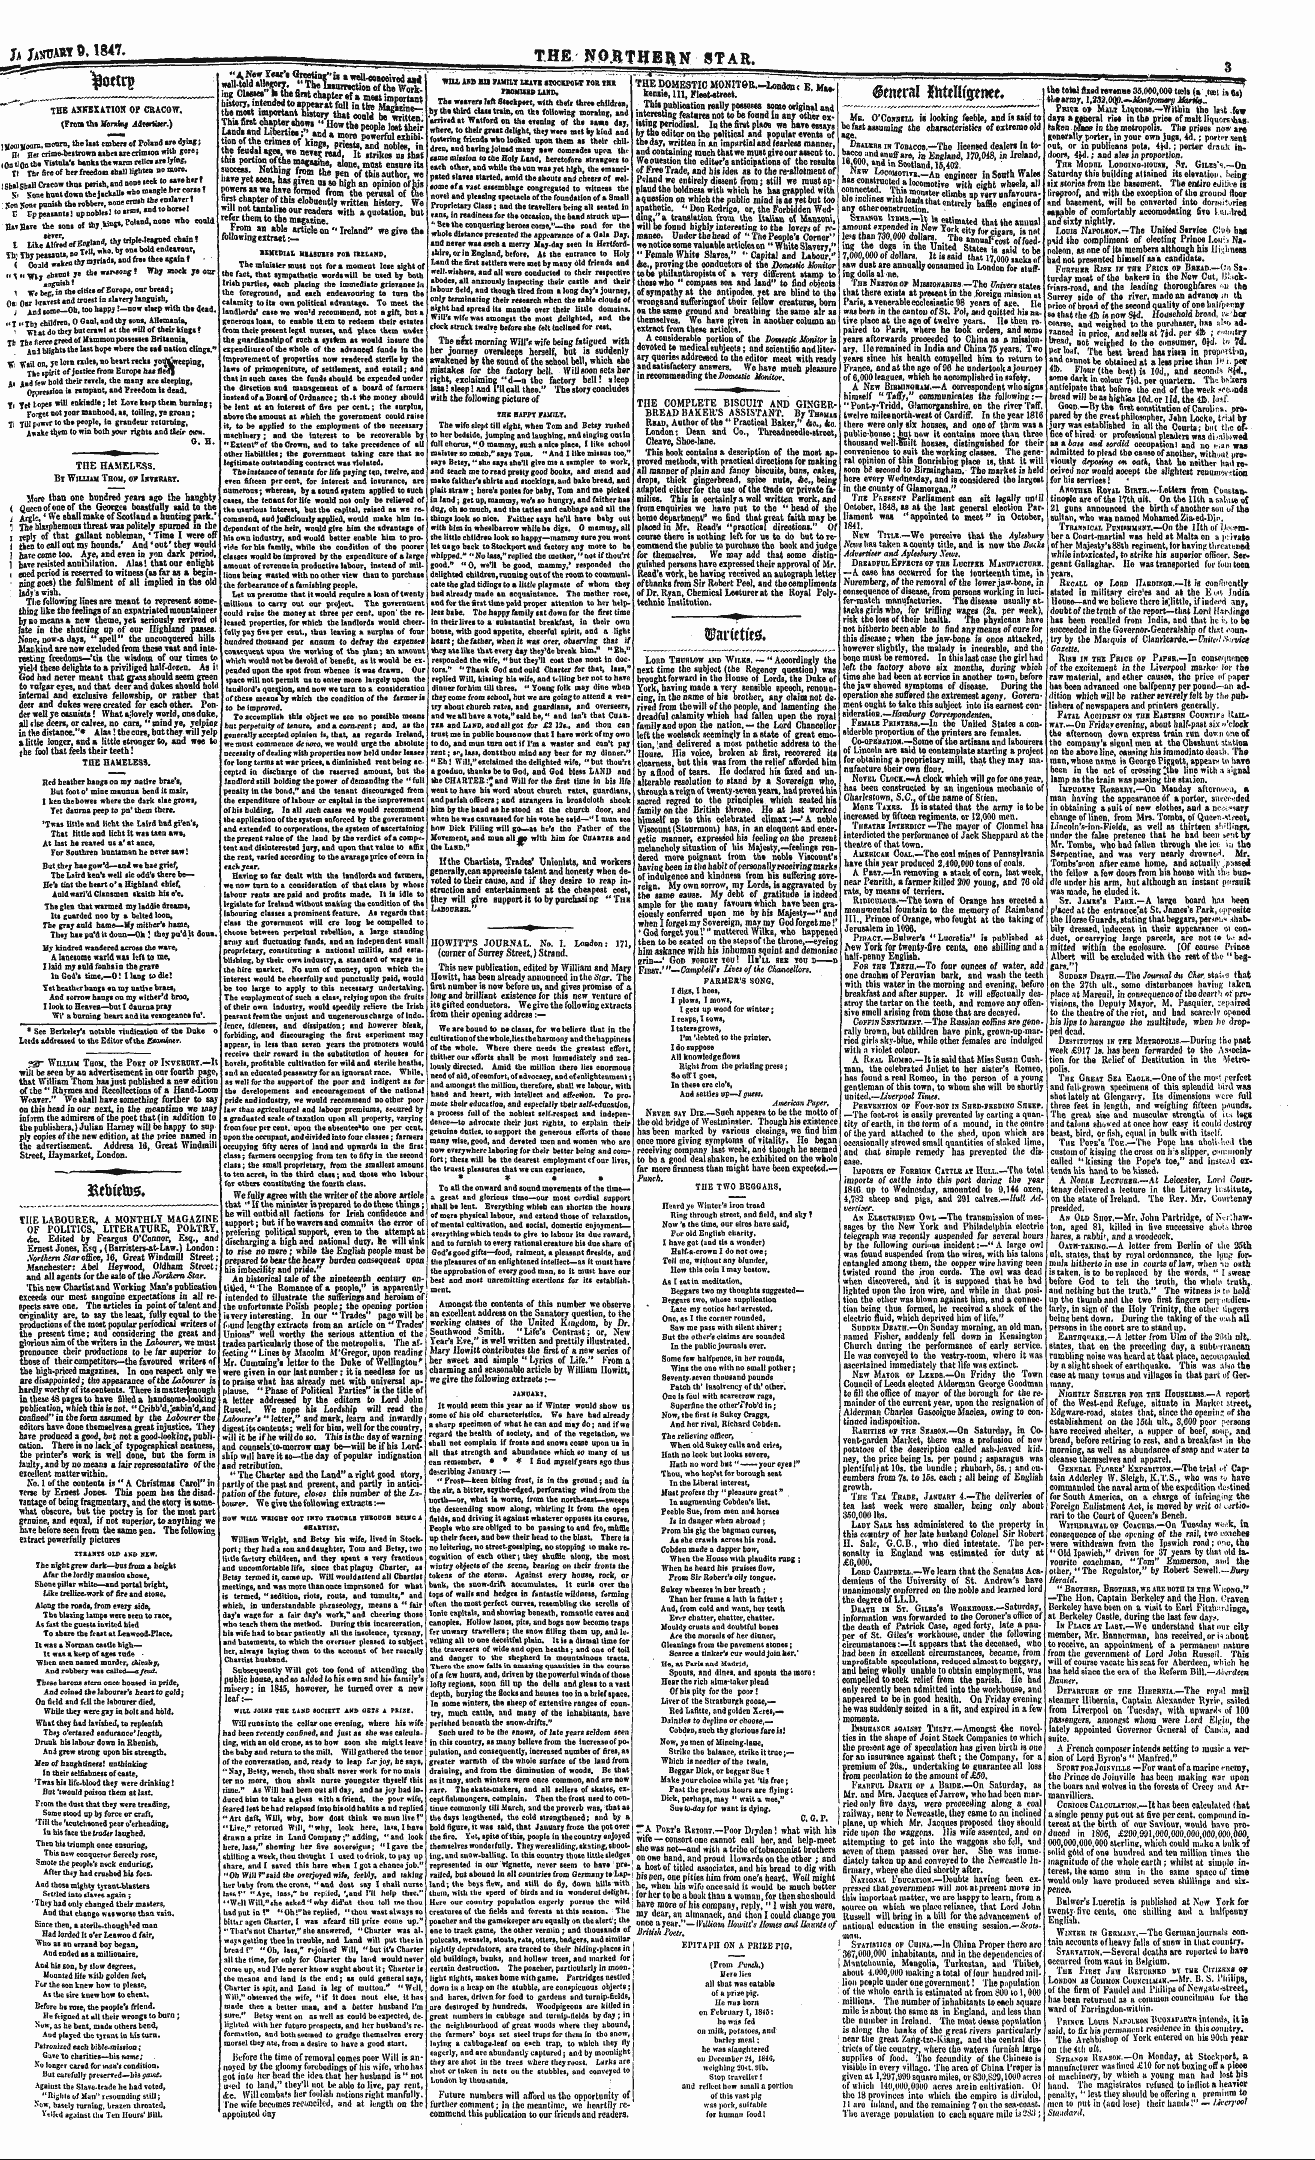 Northern Star (1837-1852): jS F Y, 3rd edition - Centra! Uttelkj^Nee.